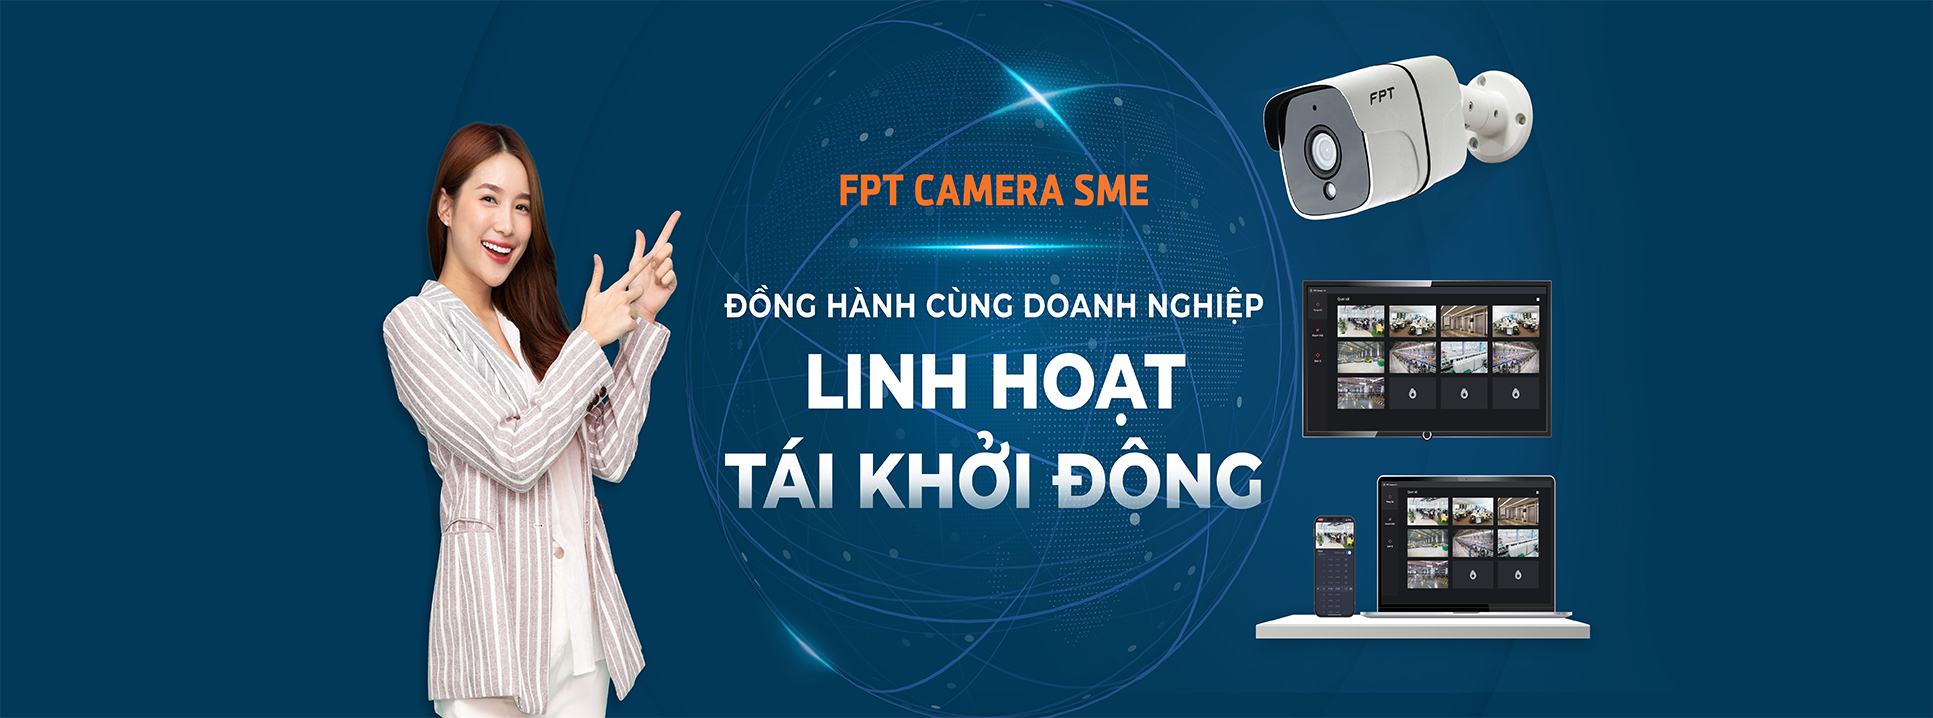 https://mangwifi.com.vn/san-pham-dich-vu/smart-home/fpt-camera